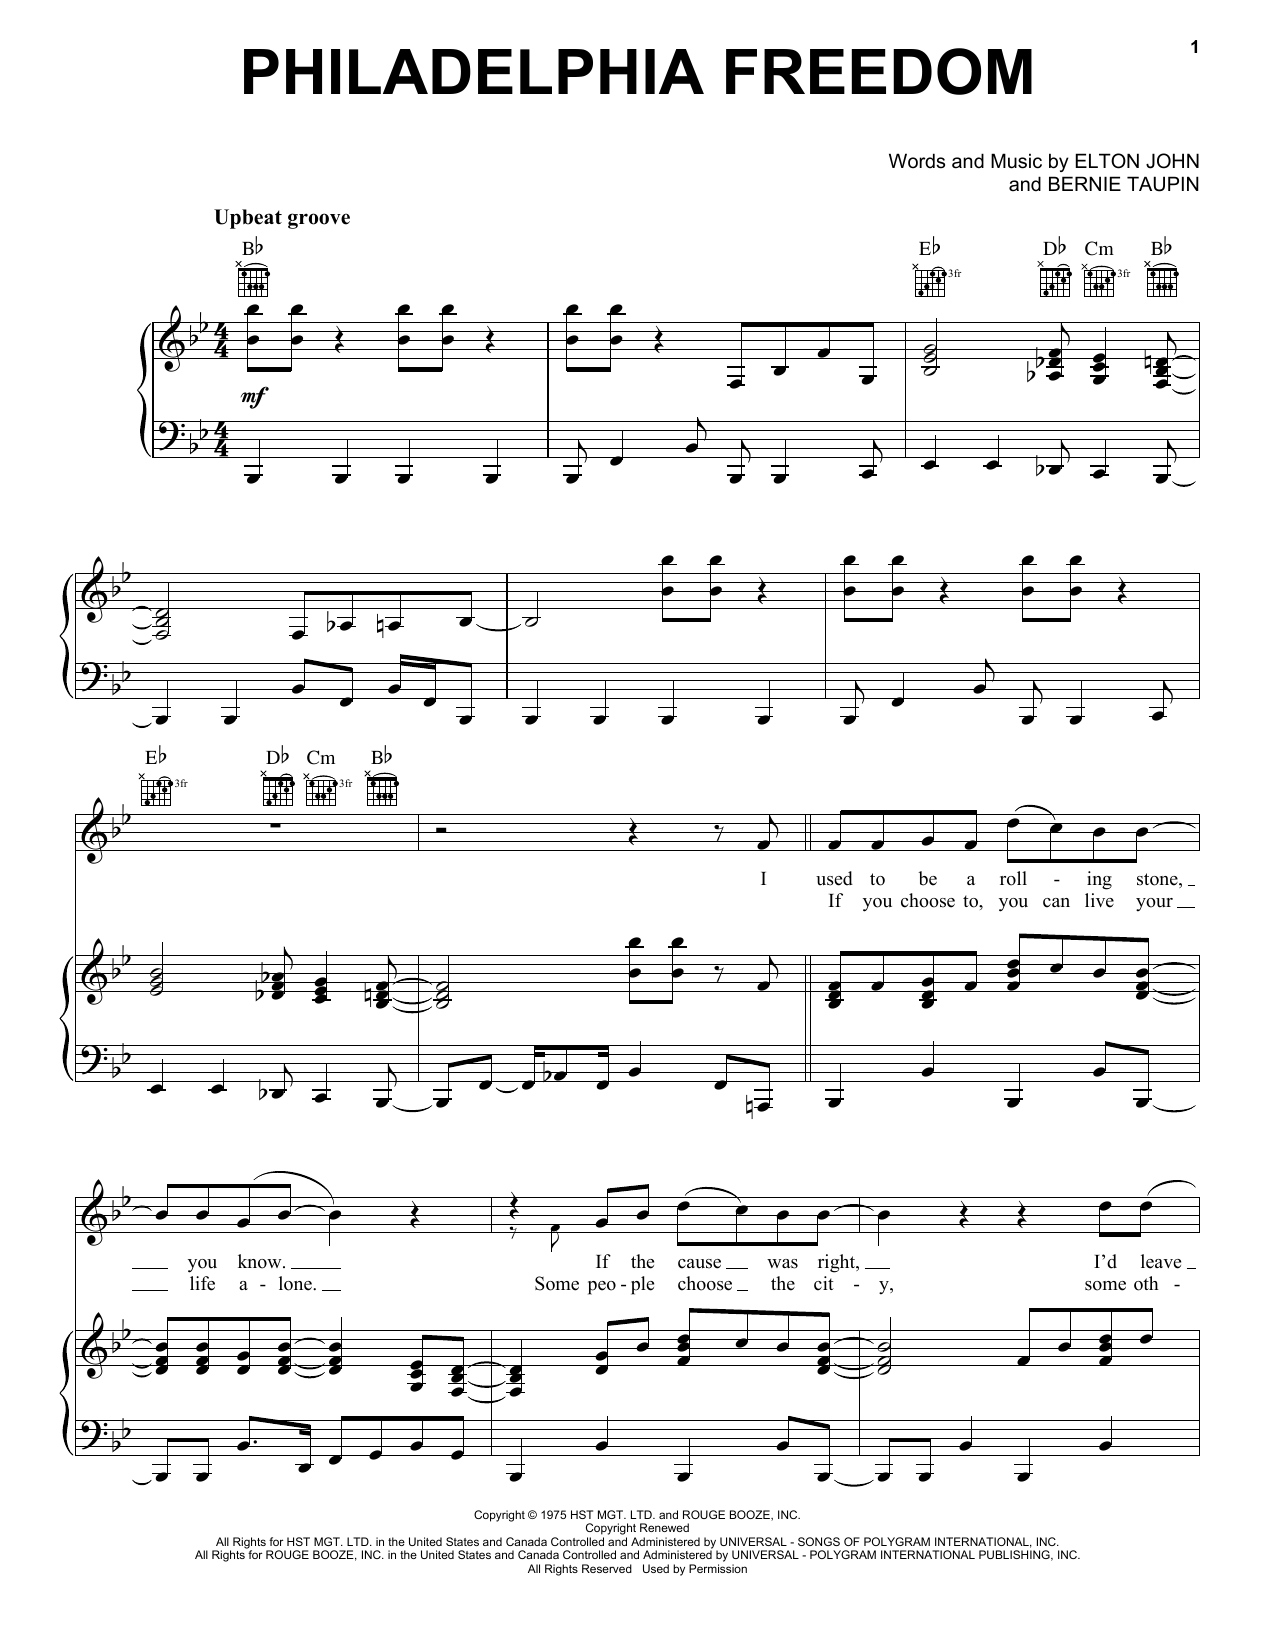 Elton John Philadelphia Freedom Sheet Music Notes & Chords for Melody Line, Lyrics & Chords - Download or Print PDF